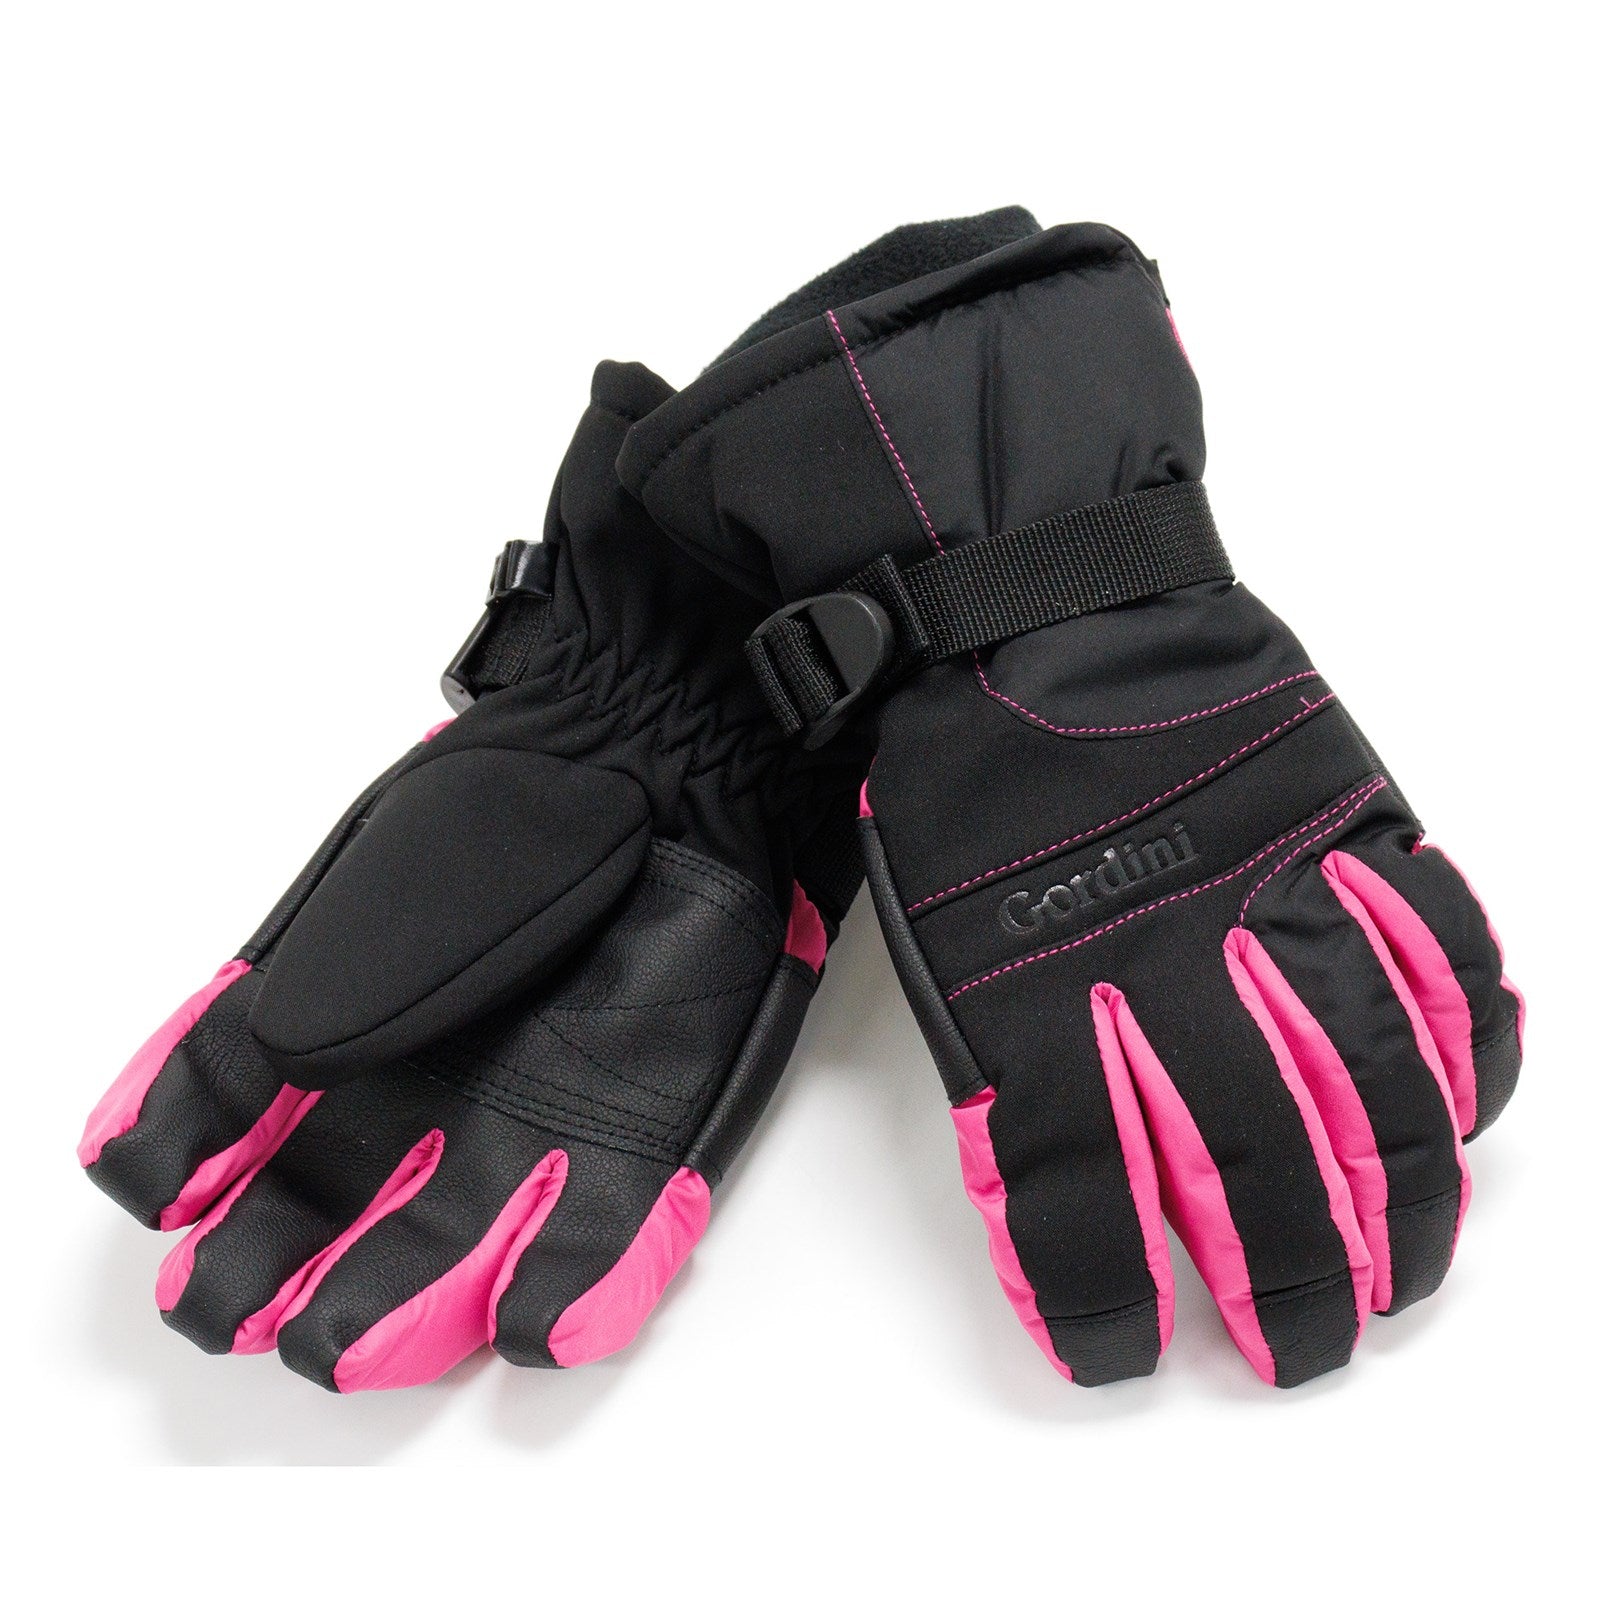 Gordini Girl Aquabloc Iii Waterproof Insulated Junior Gloves